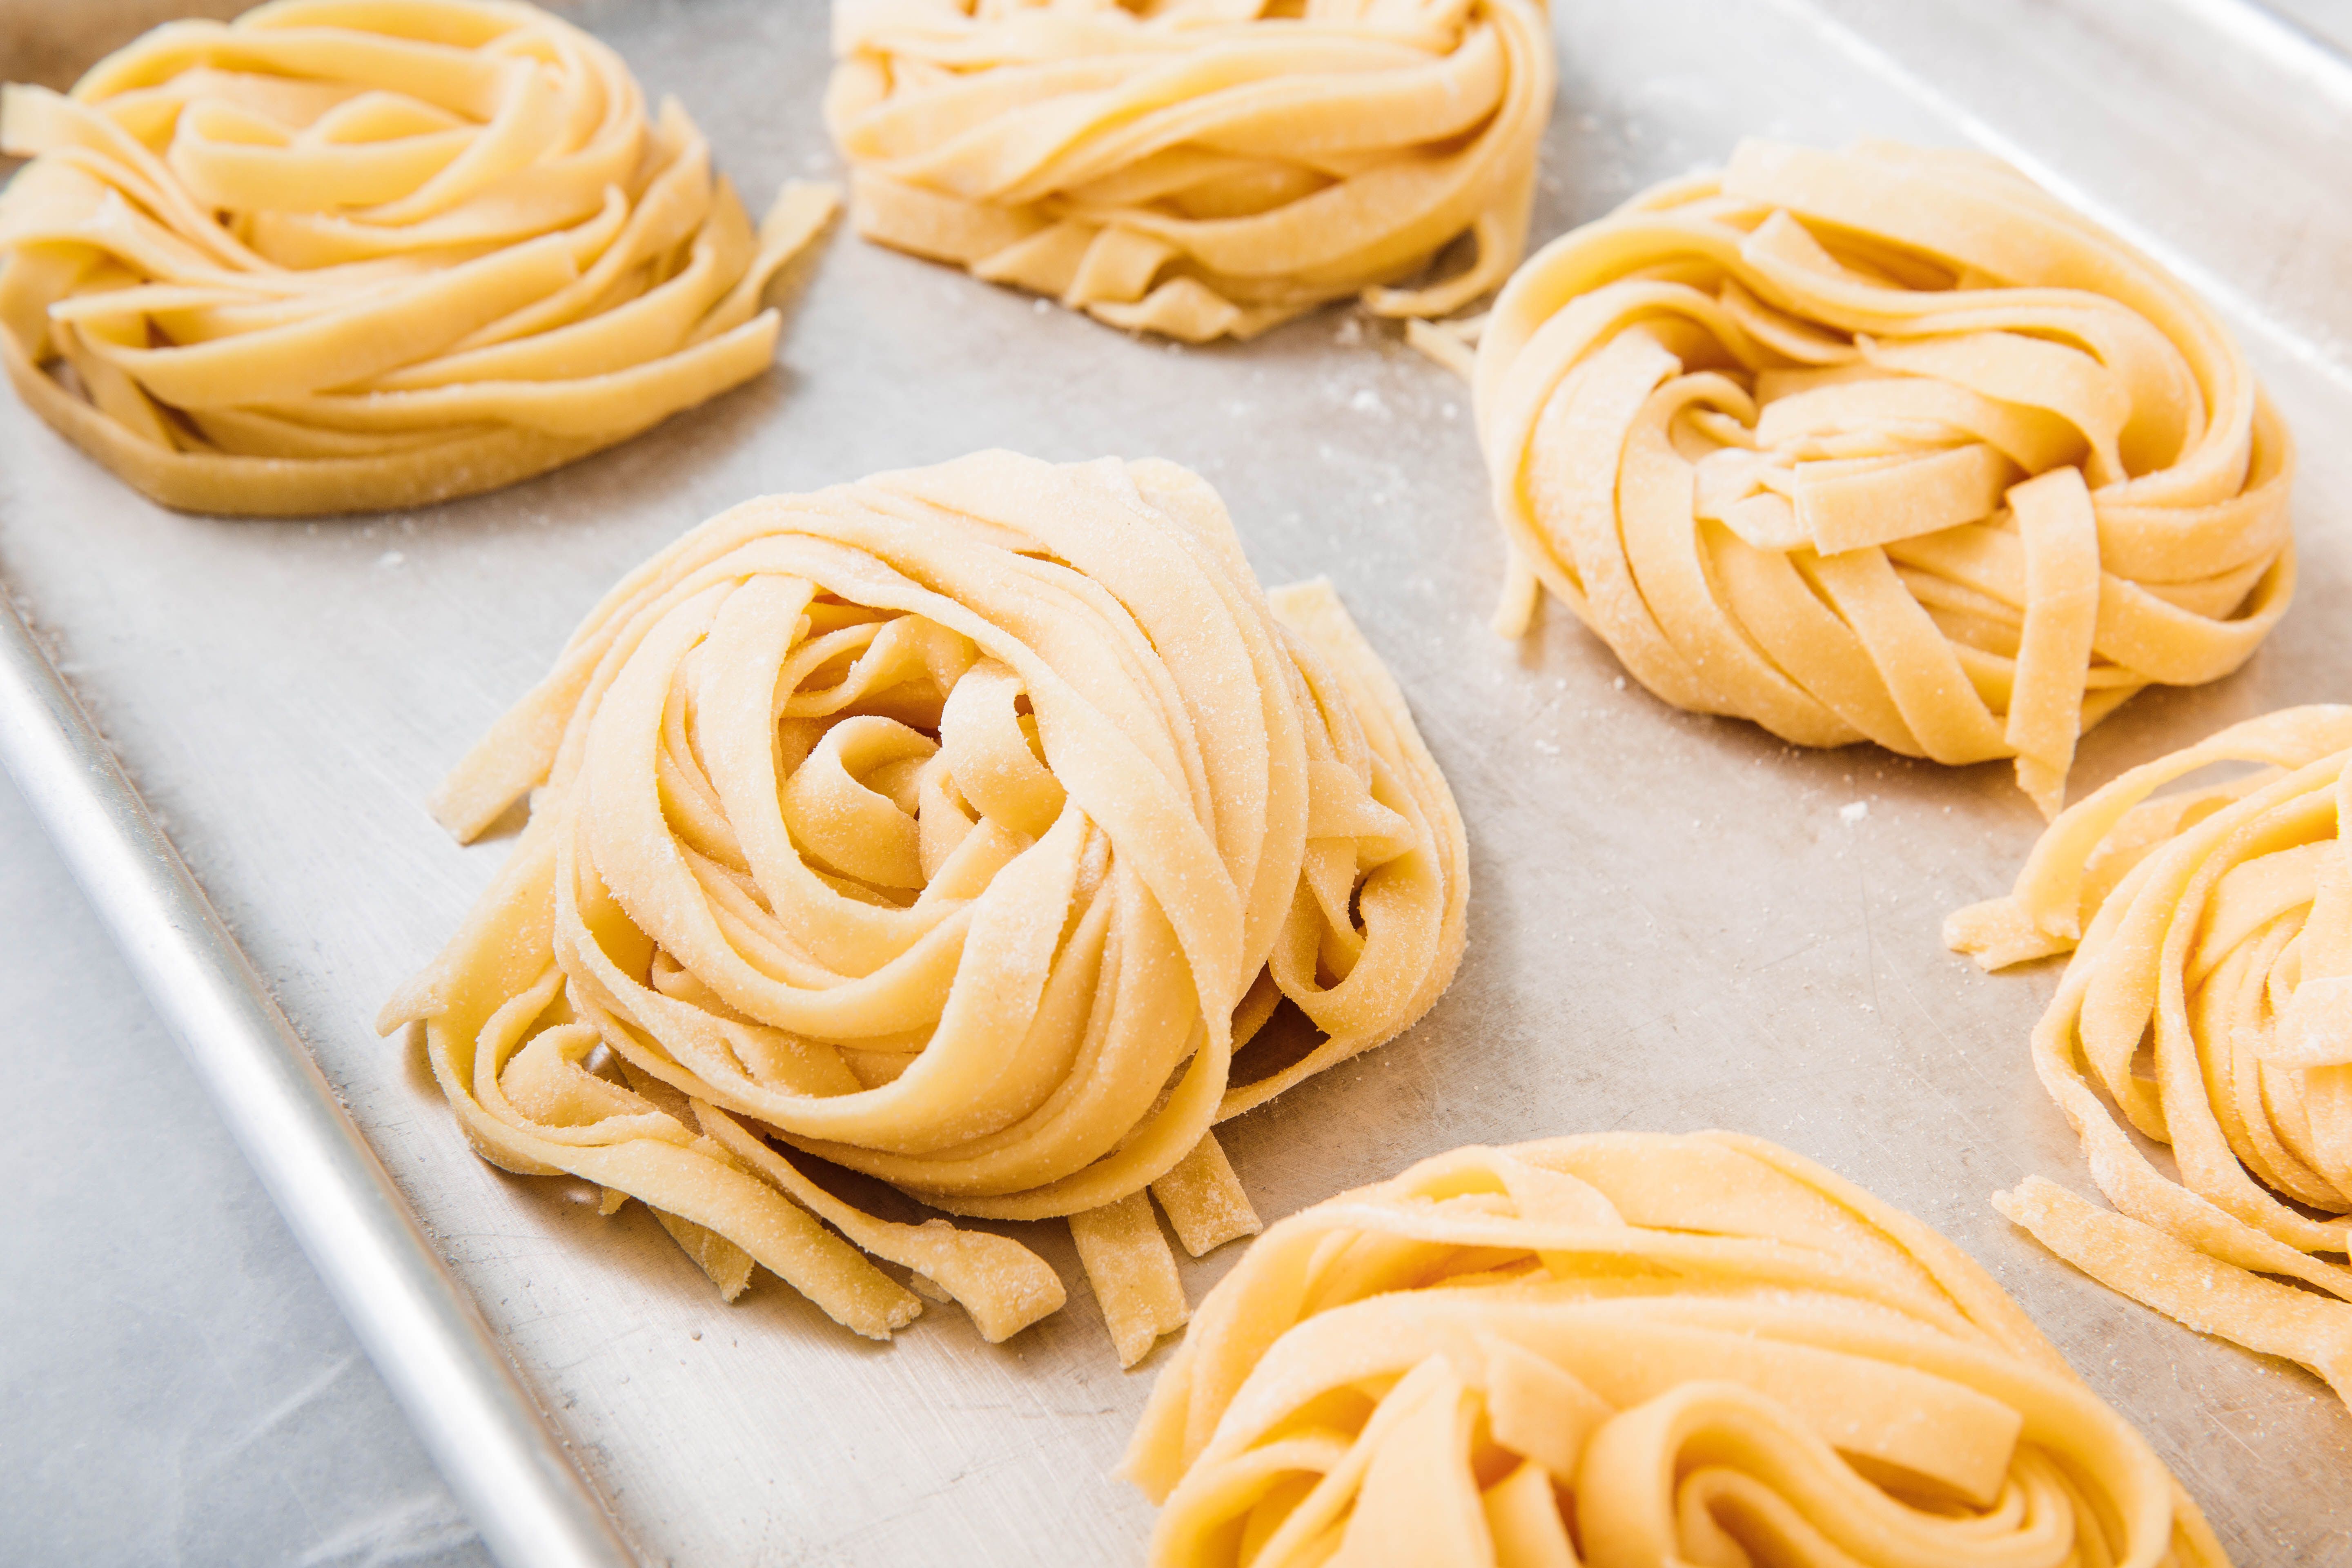 Best Homemade Gluten Free Pasta Recipe - How to Make Gluten Free Pasta